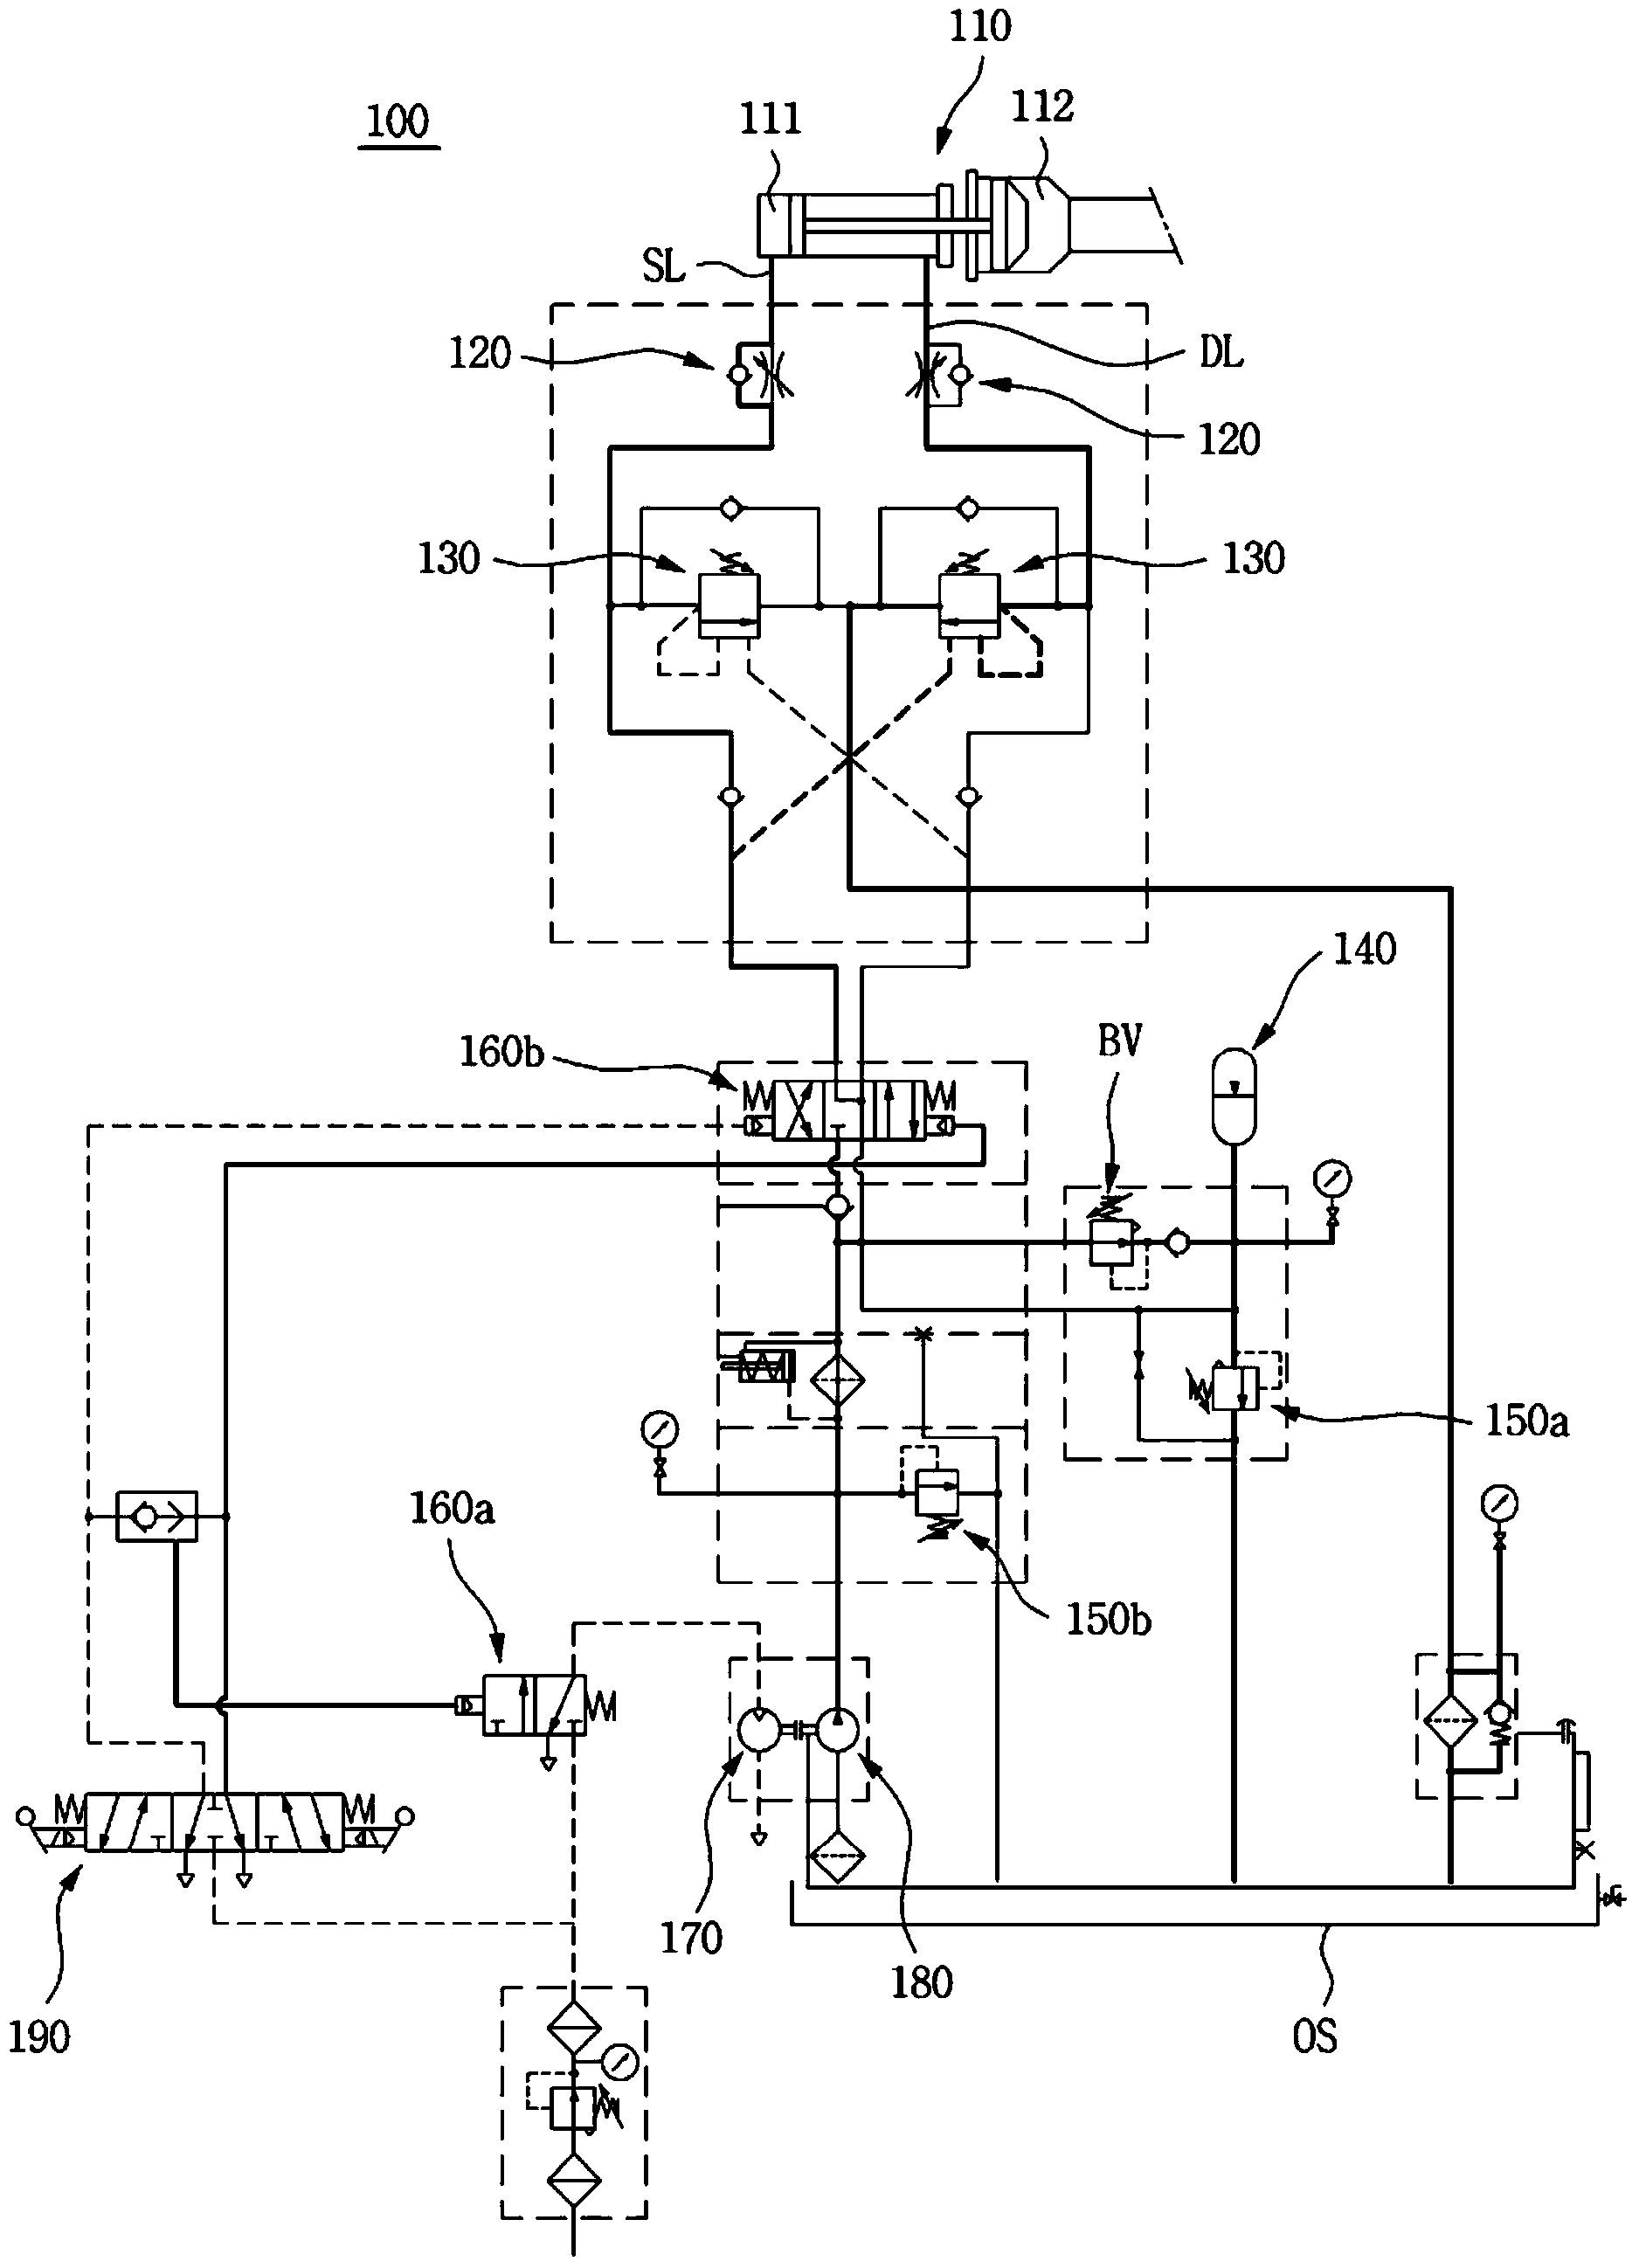 Hydraulic control device using hydraulic actuator